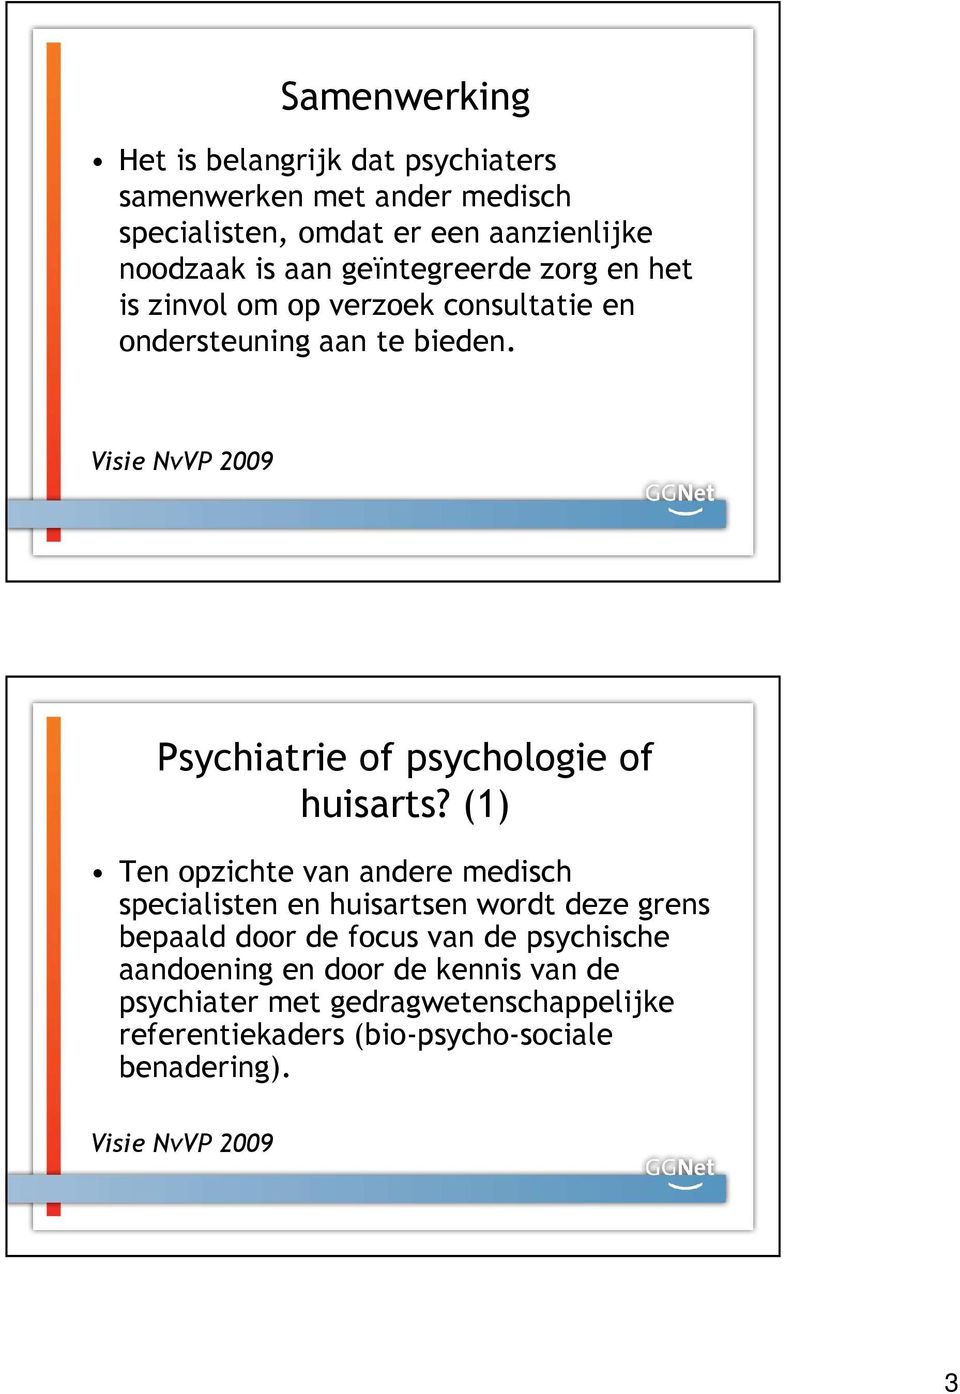 Psychiatrie of psychologie of huisarts?